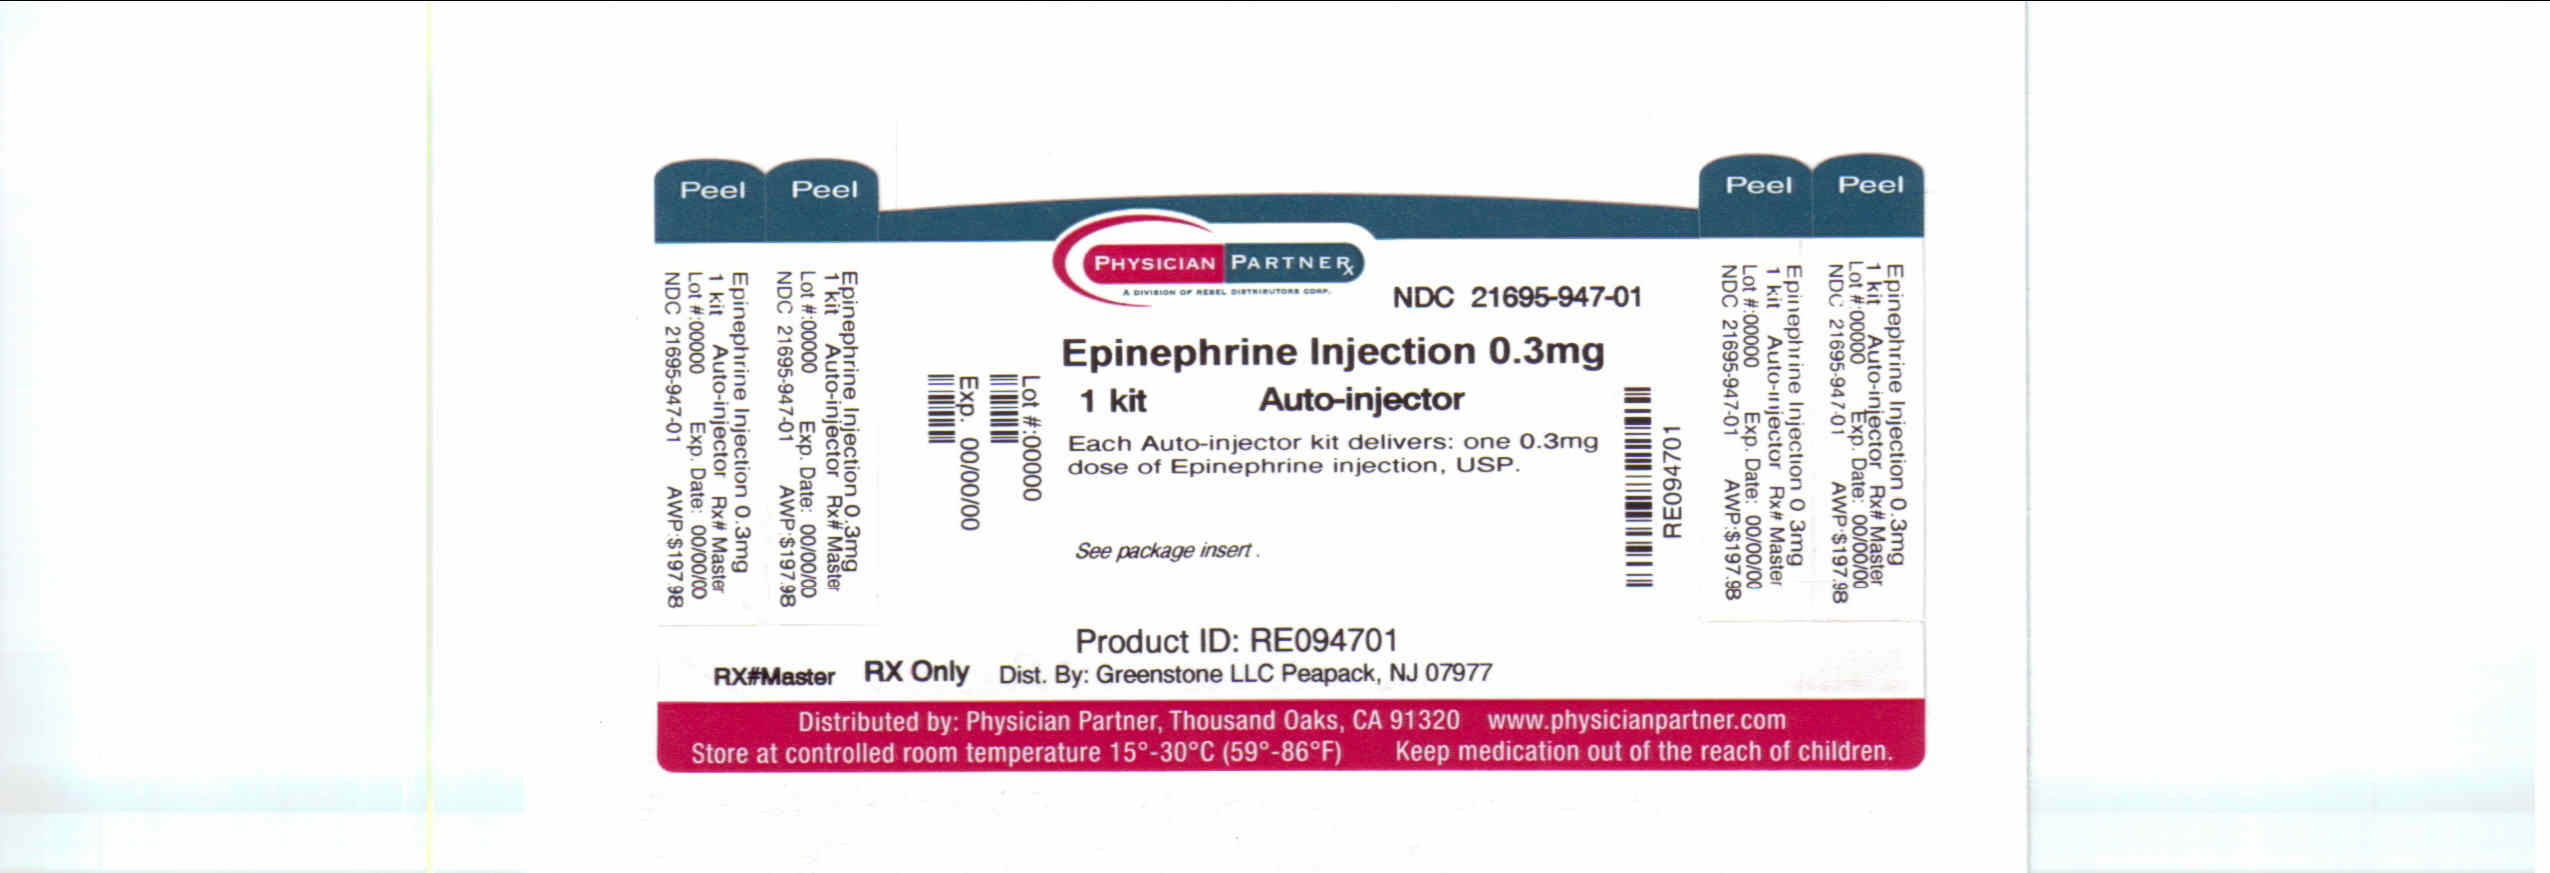 Epinephrine Injection 0.3mg